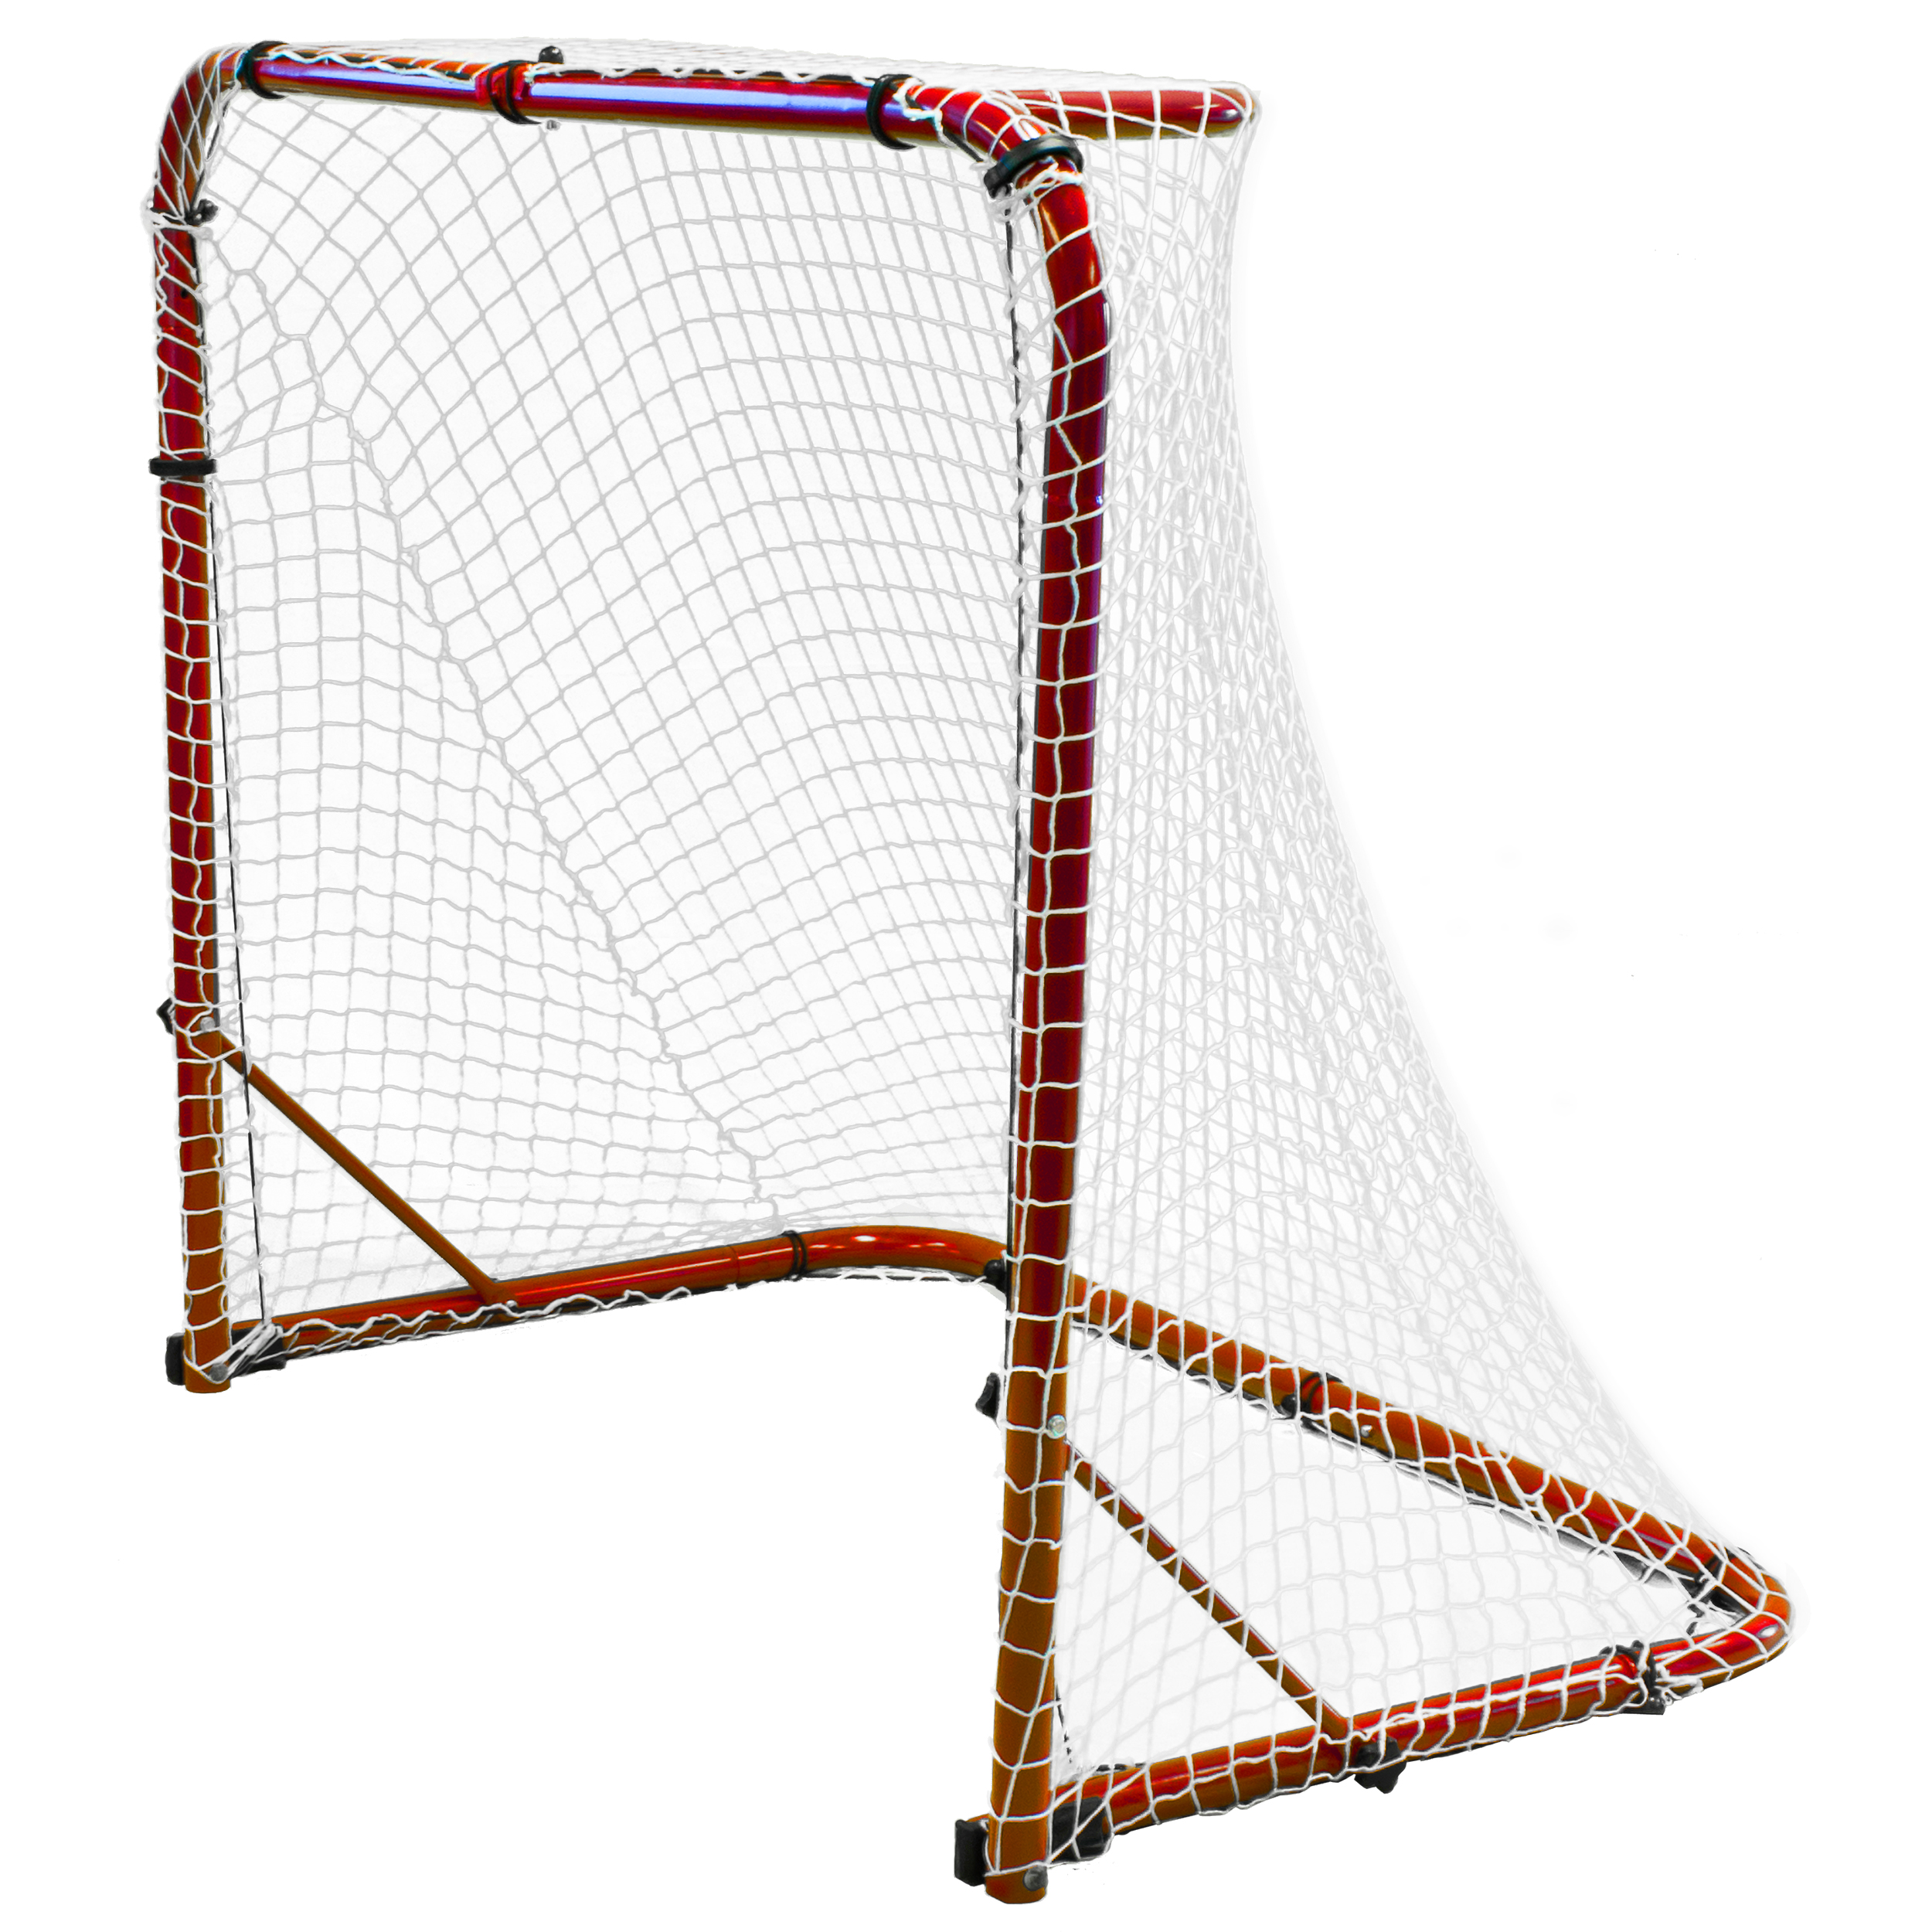 54-Inch Street Hockey Goal Nets Sports " Outdoors Goals Rink Equipment Ice Team 